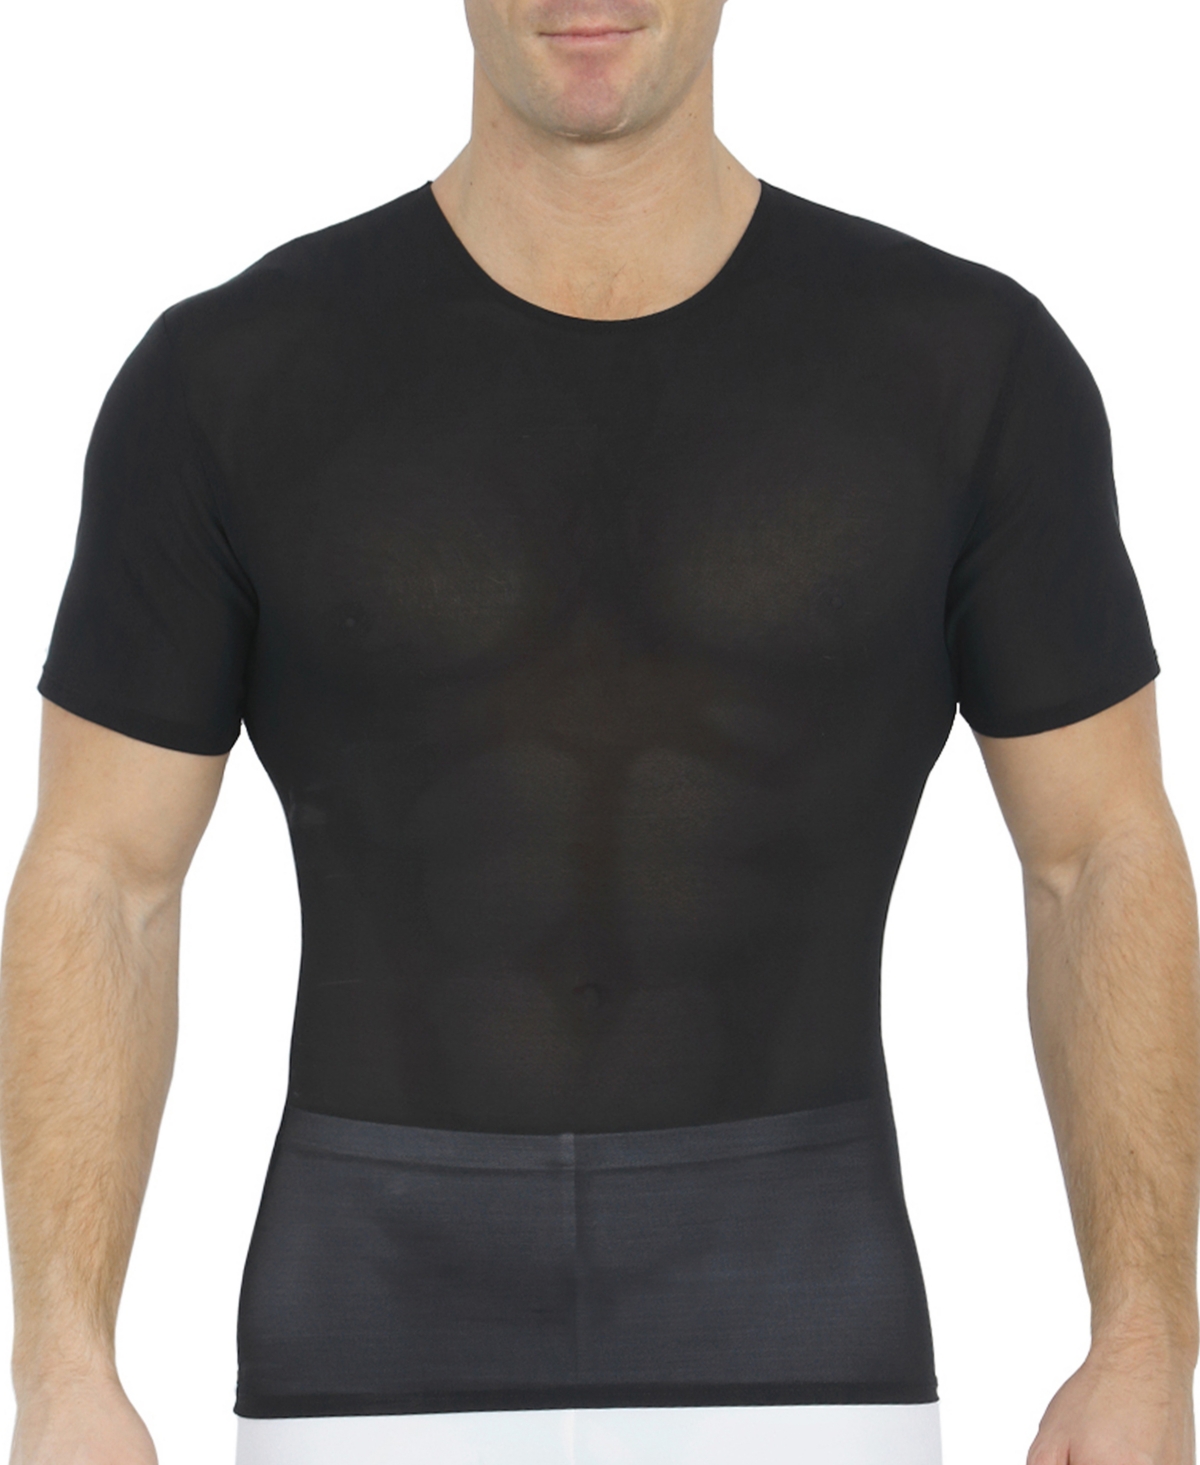 Men's Power Mesh Compression Short Sleeve Crewneck T-shirt - Black